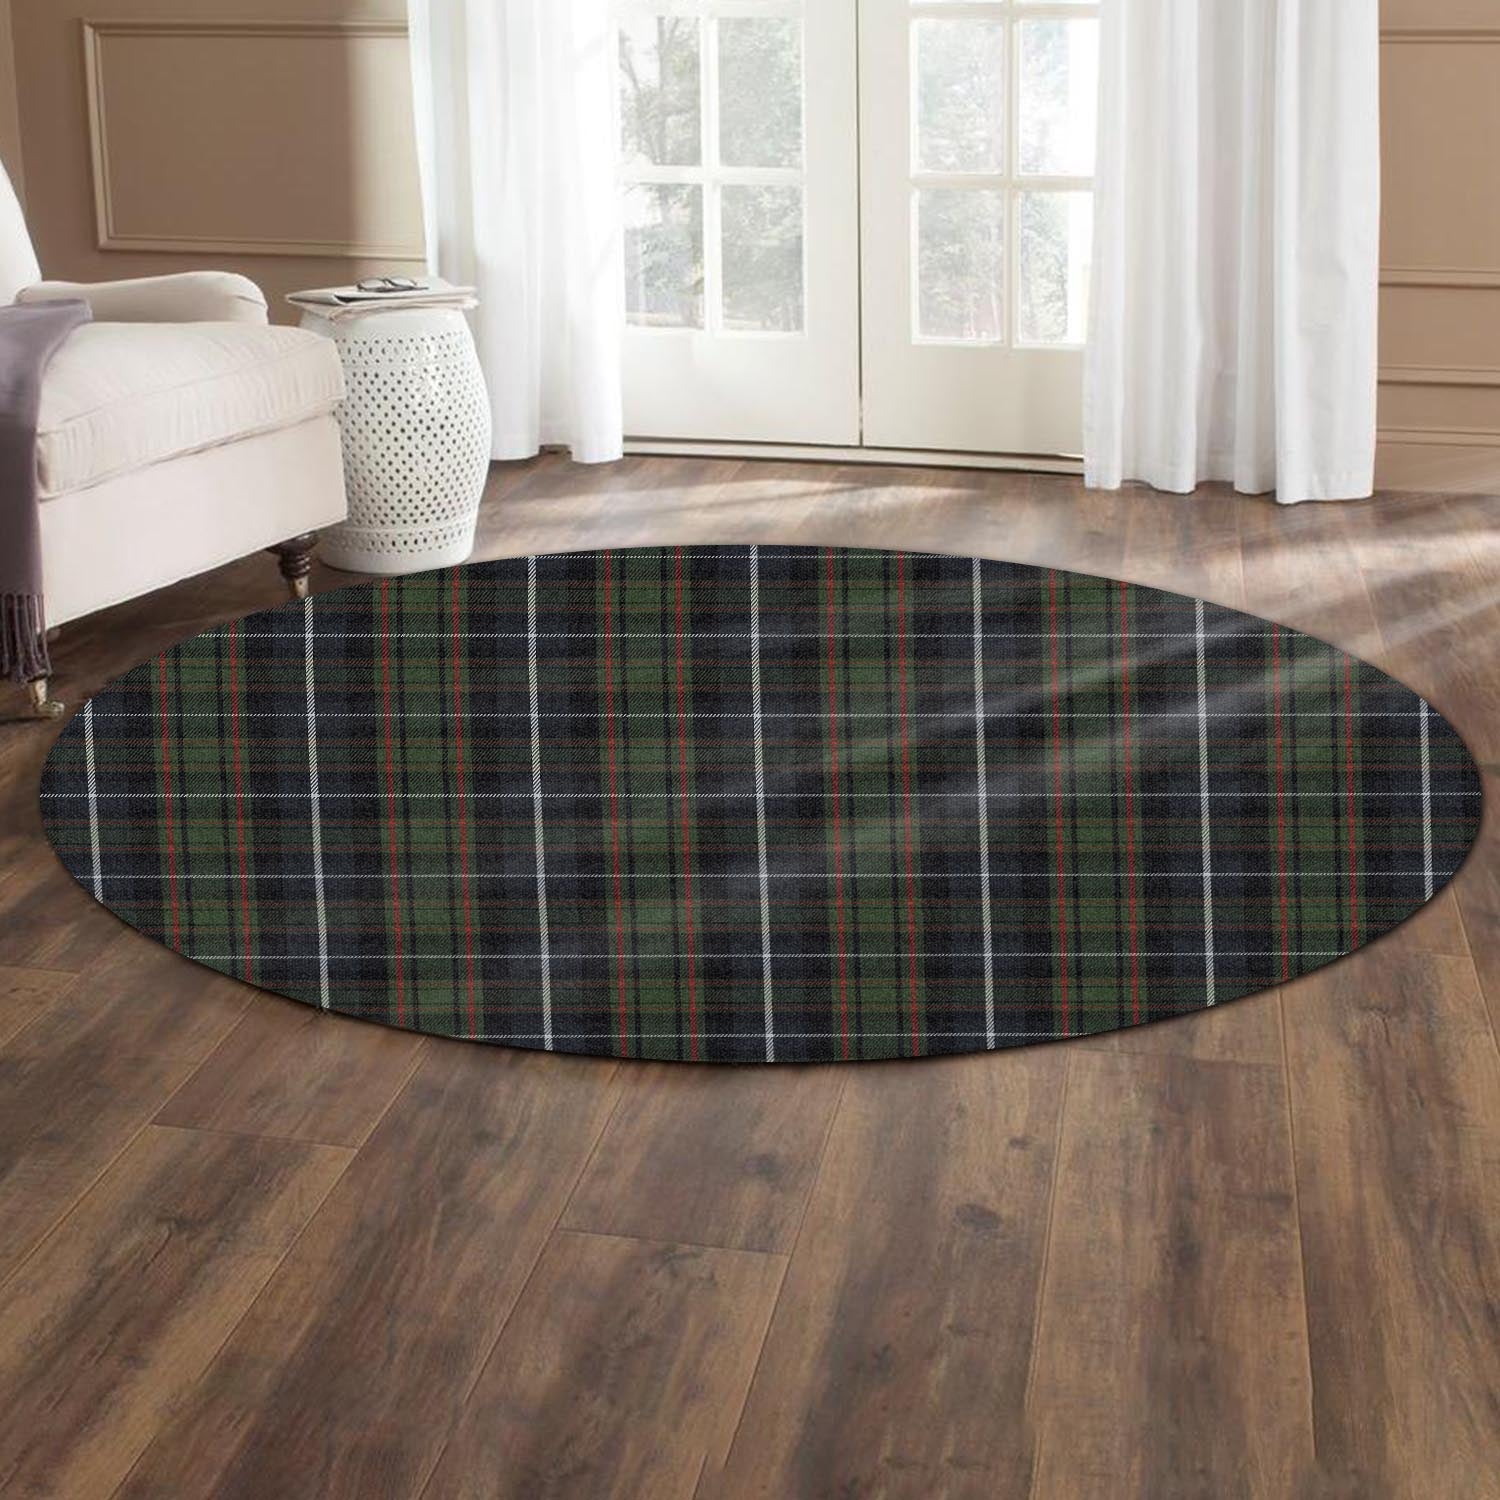 macrae-hunting-tartan-round-rug